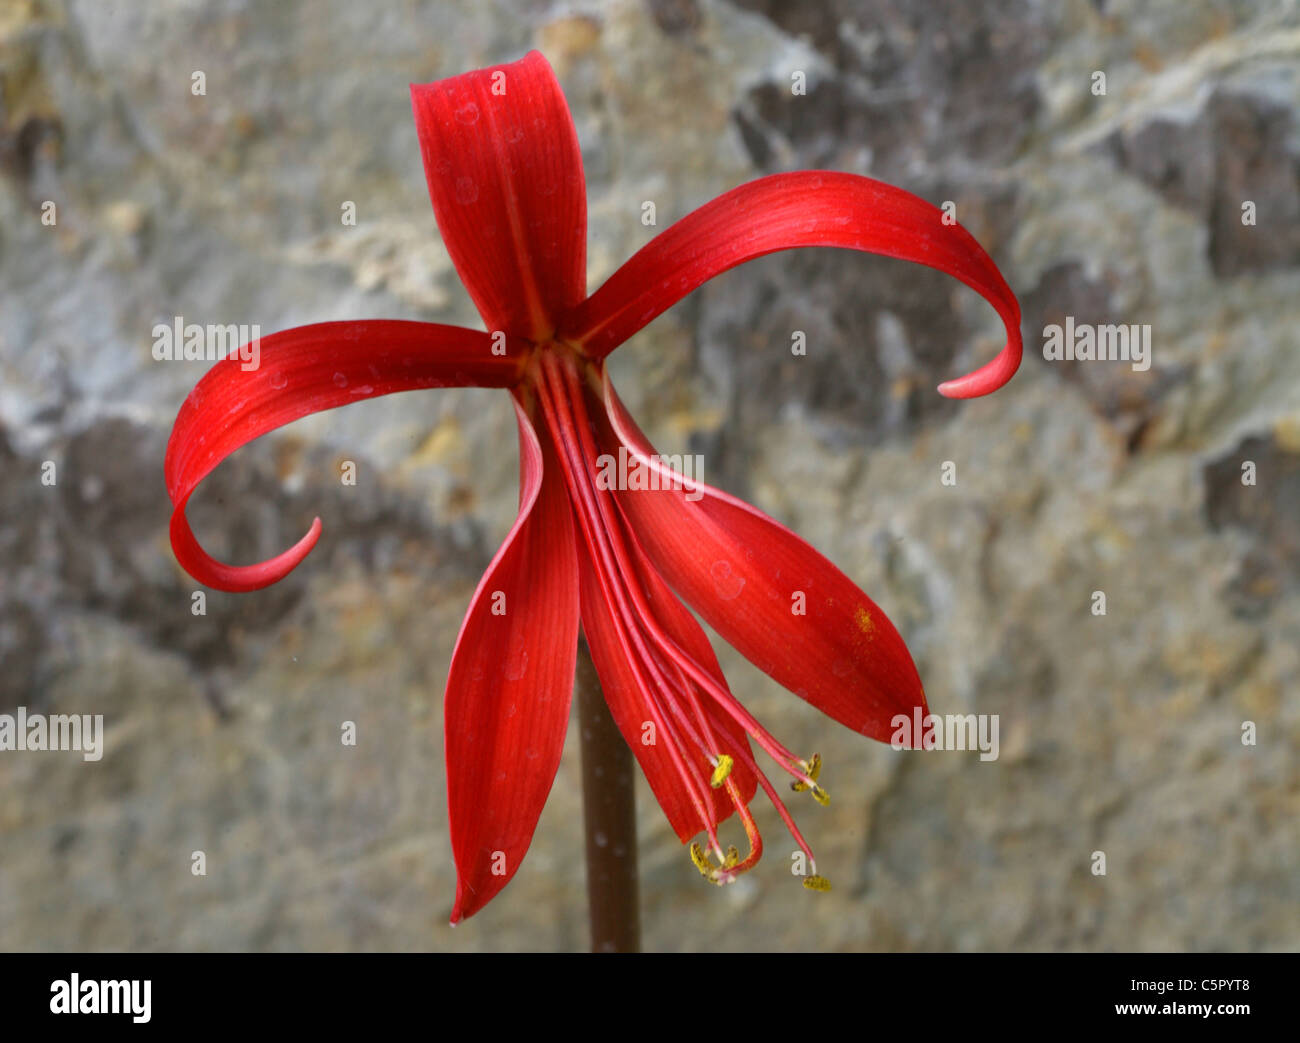 Aztec Lily or Jacobean Lily, Sprekelia formosissima, Amaryllidaceae. Mexico. Syn. Amaryllis formosissima. Stock Photo